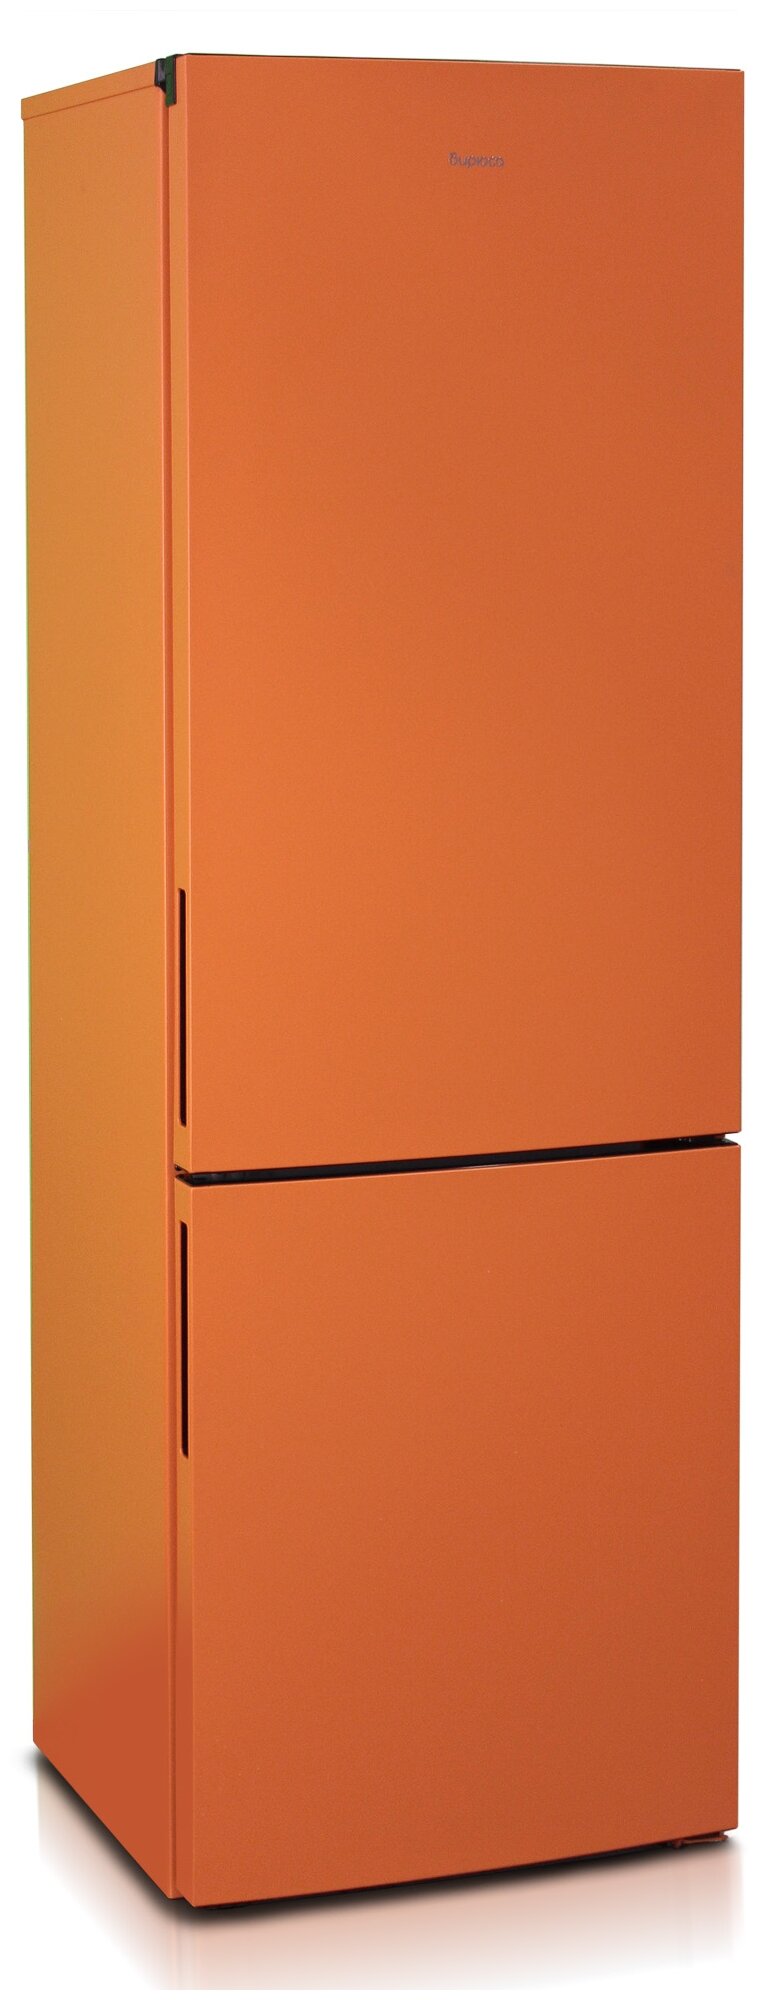 Холодильник-морозильник типа I БИРЮСА-Т6027 - фотография № 2